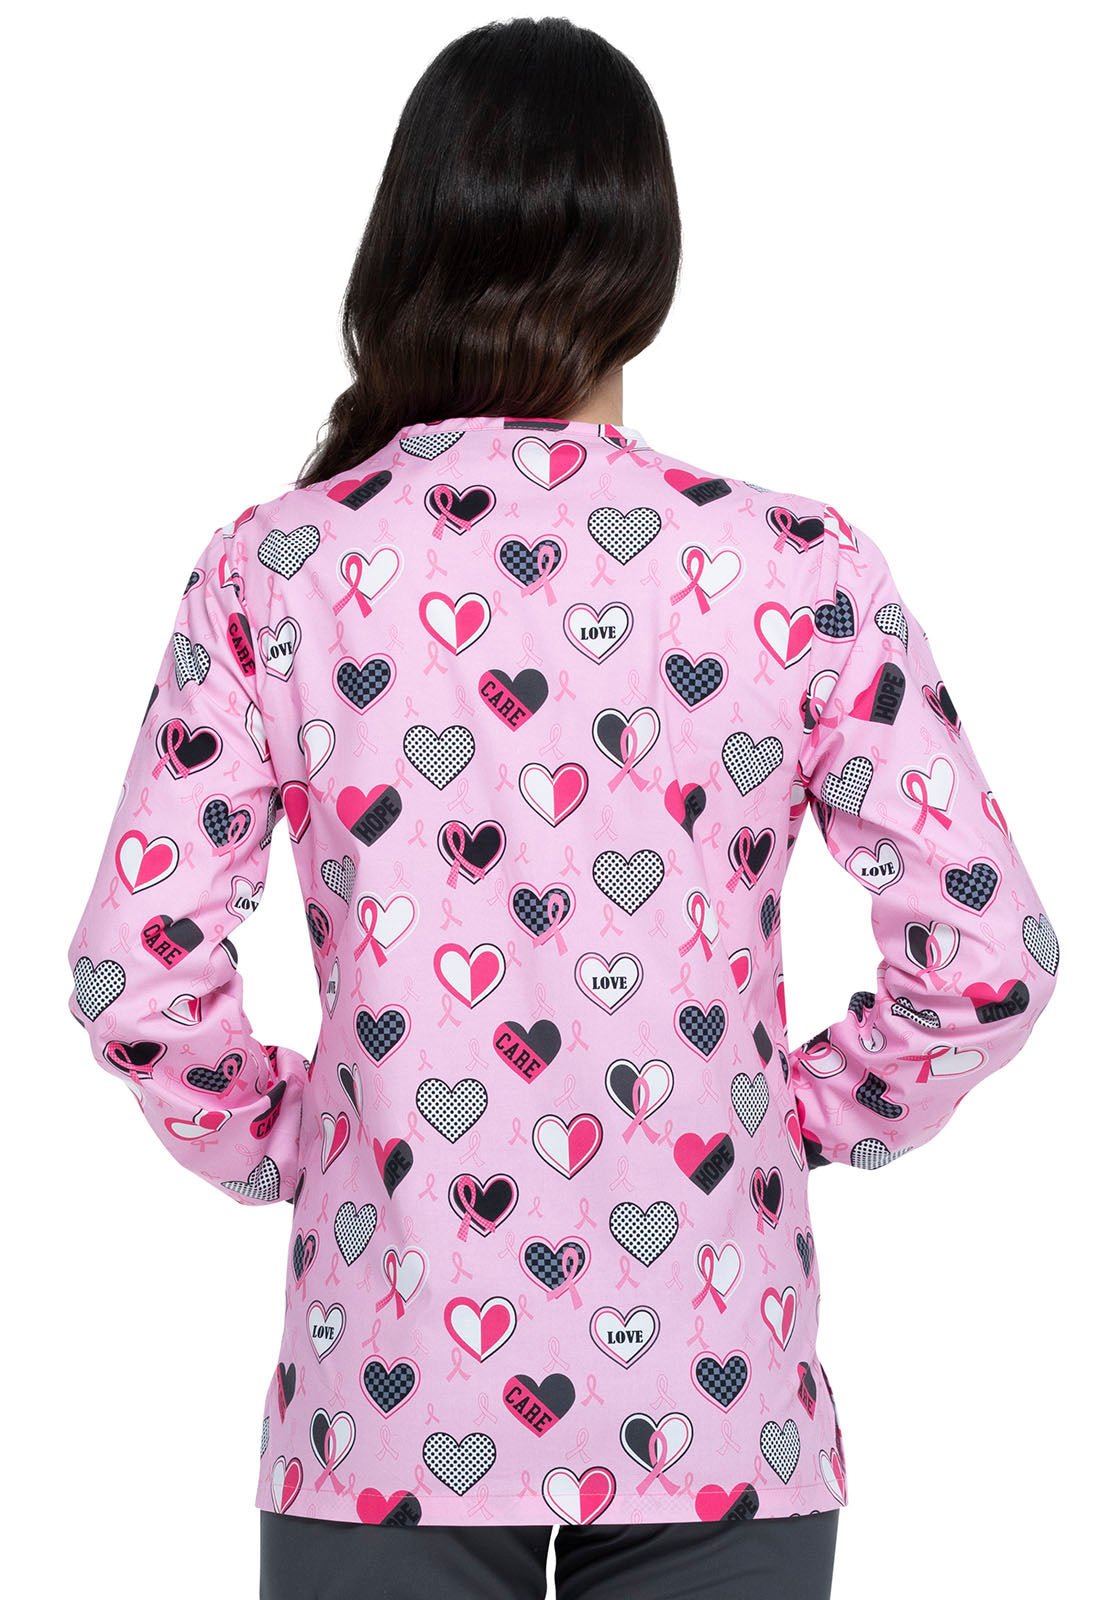 Breast Cancer Awareness Print Snap Front Scrub Jacket DK301 AVCA - Scrubs Select